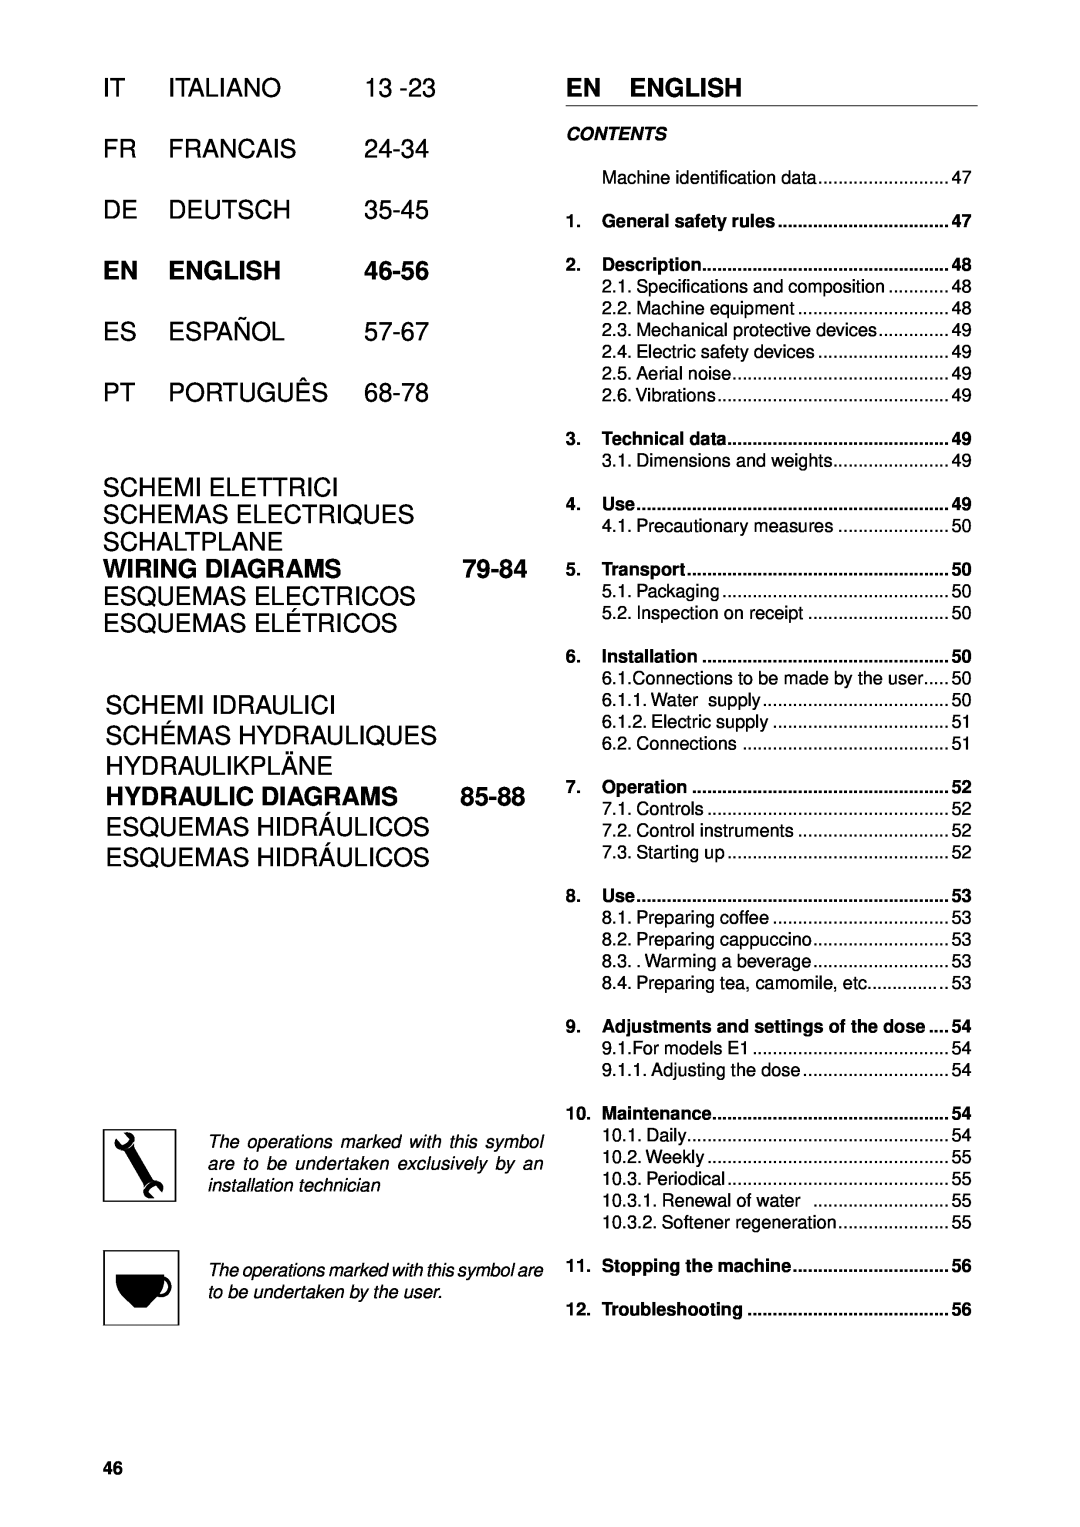 Rancilio S1 TANK, E1 manual English, 46-56, Wiring Diagrams, 79-84, Hydraulic Diagrams, 85-88 